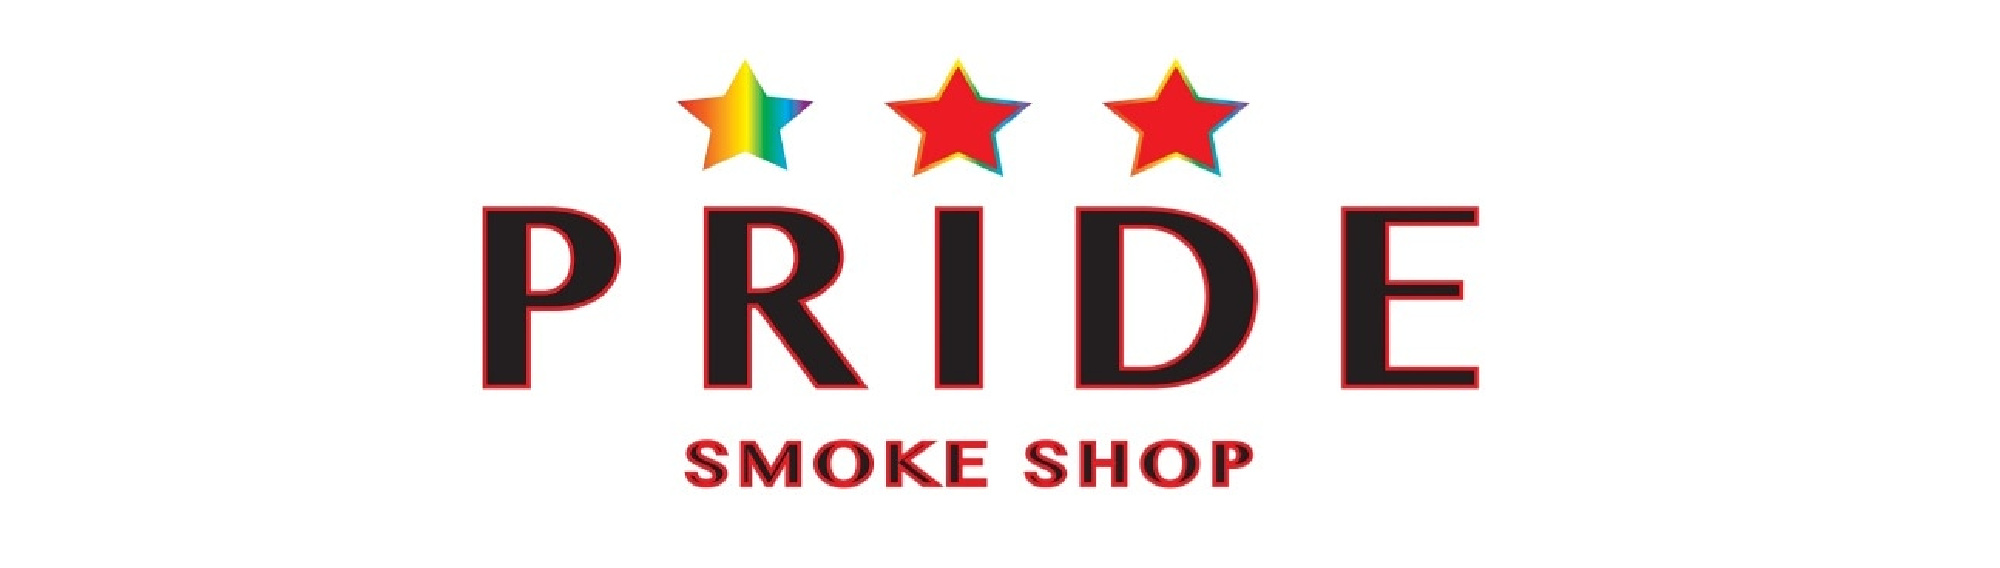 image of pride smoke shop & gift store in washington dc